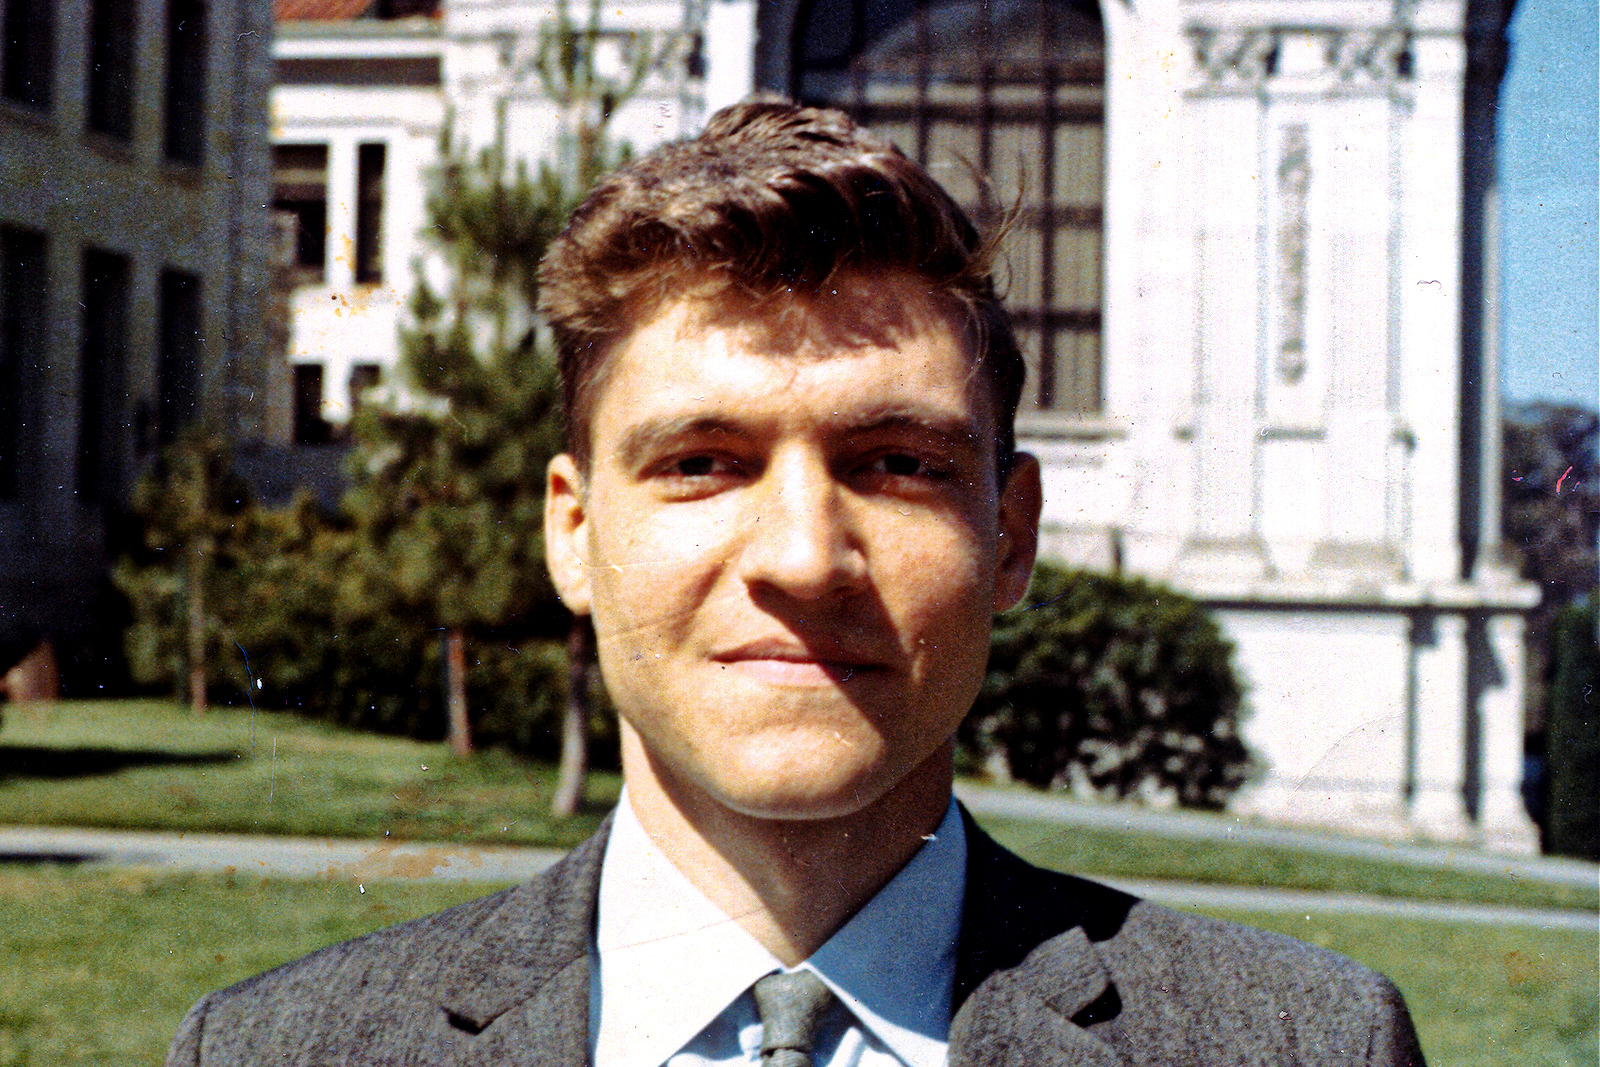 A young Ted Kaczynski